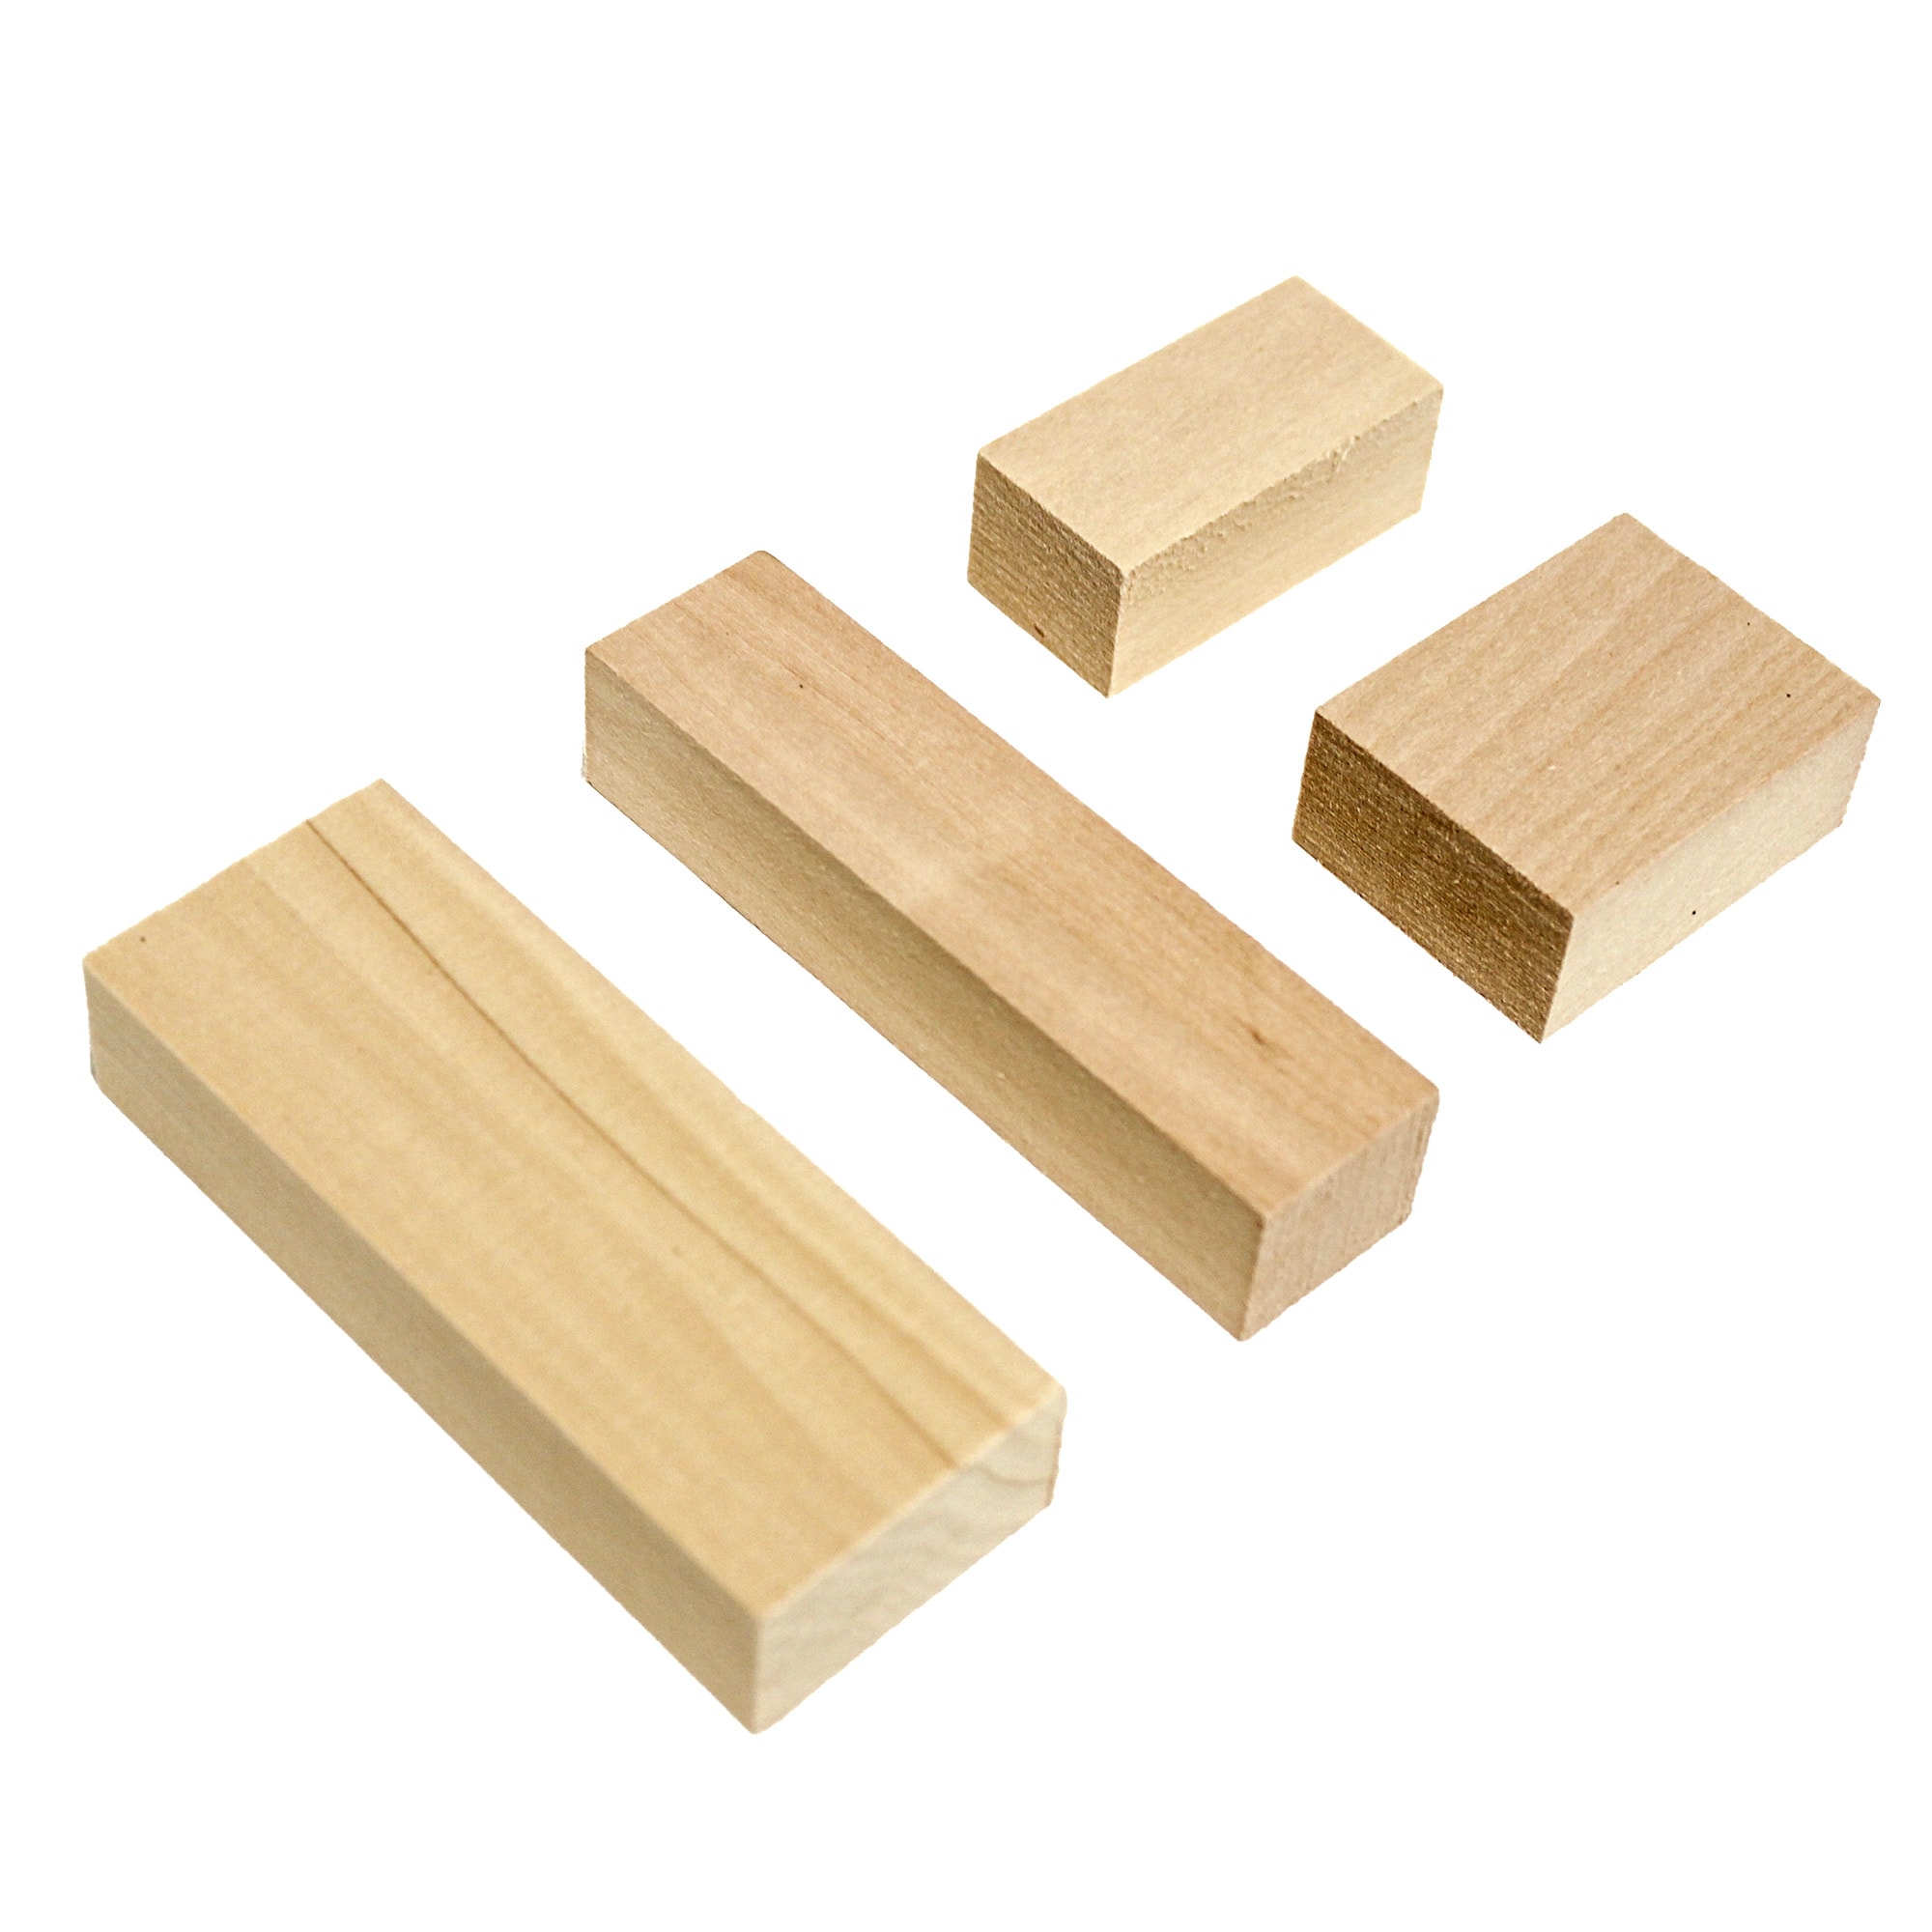 Pine Wood Whittling Blocks Kit Unfinished Wood Blocks for Wood